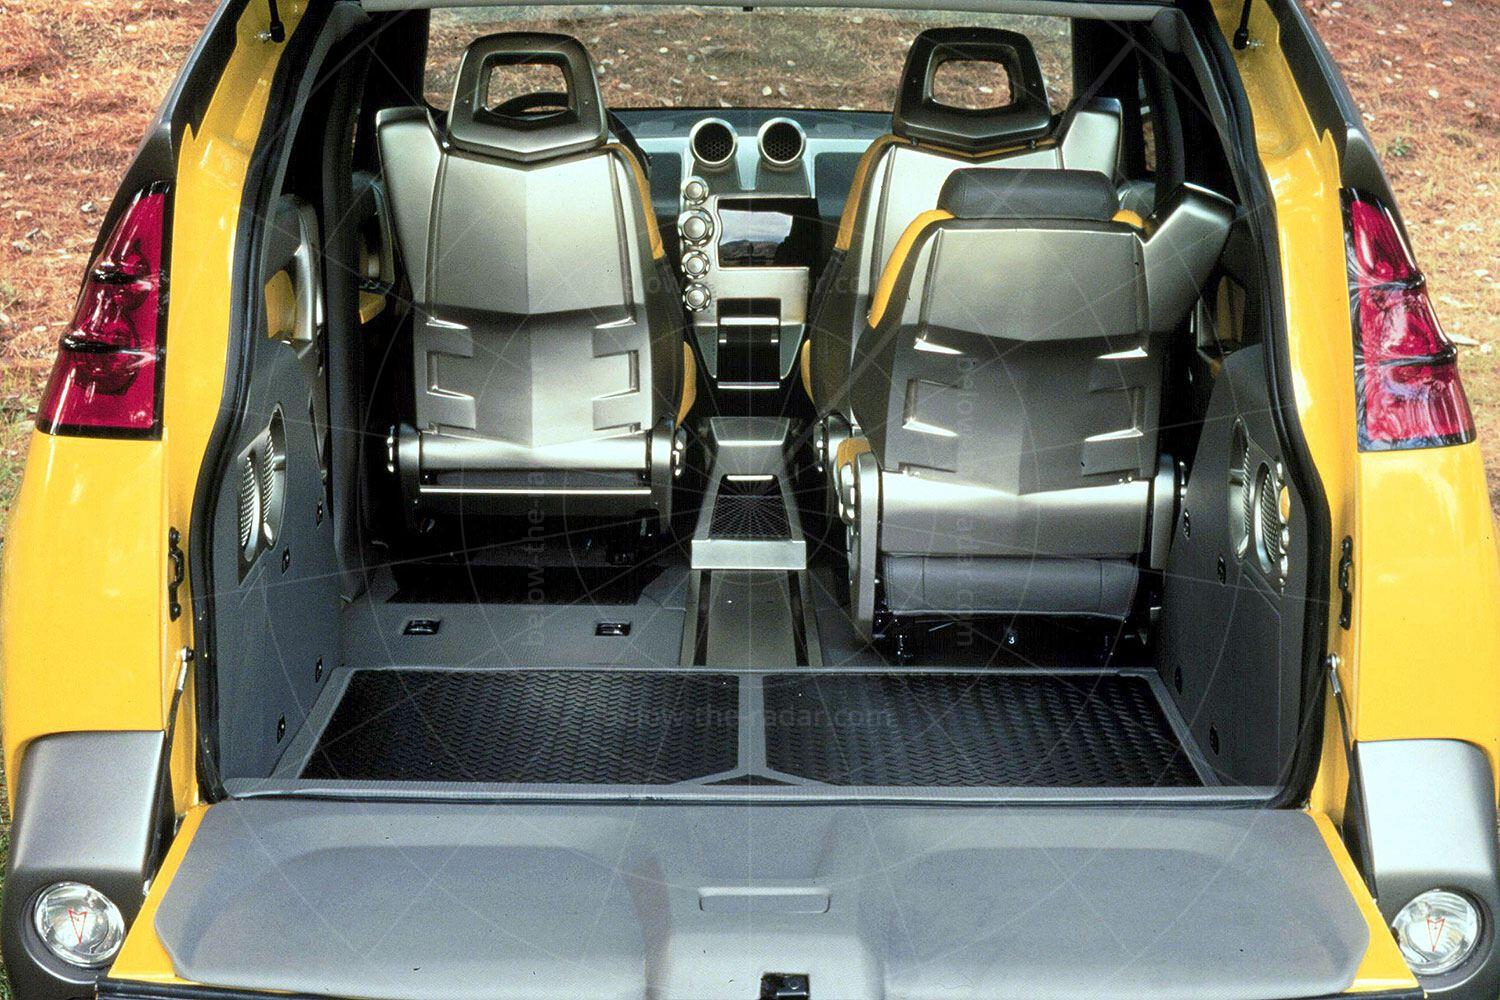 Pontiac Aztek concept - interior Pic: General Motors | Pontiac Aztek concept - interior